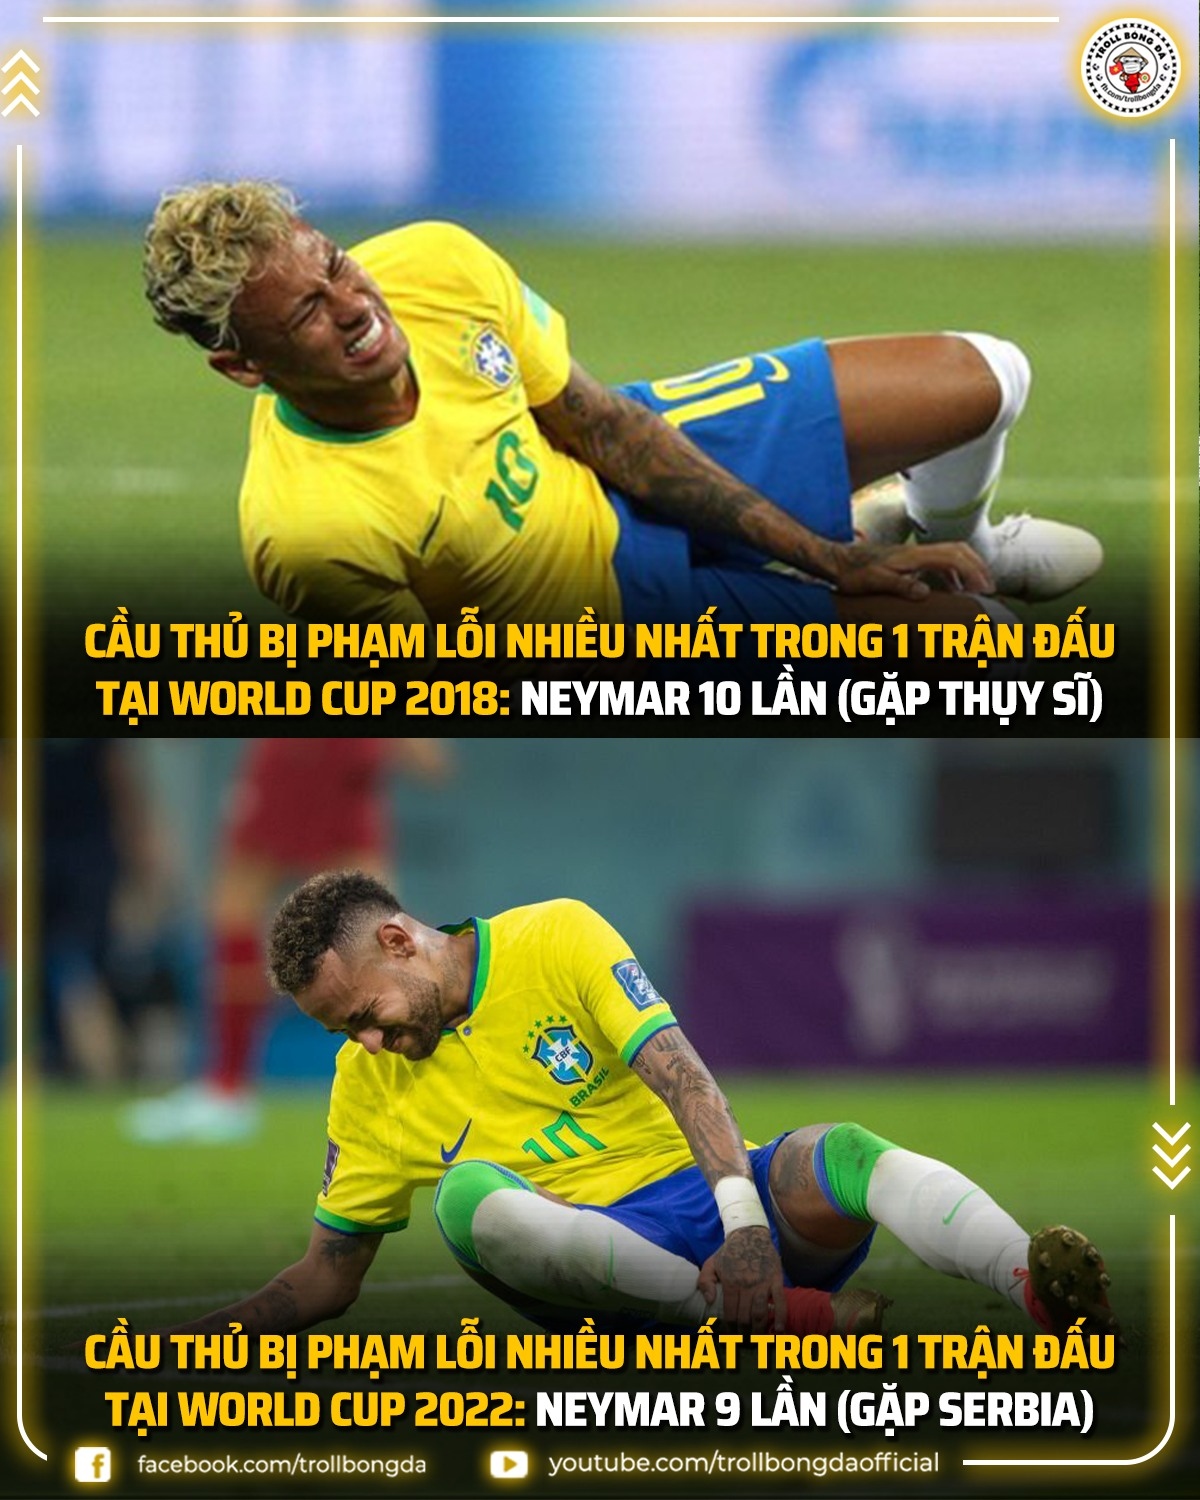 biem hoa world cup 2022 neymar co suc hut dac biet hinh anh 2